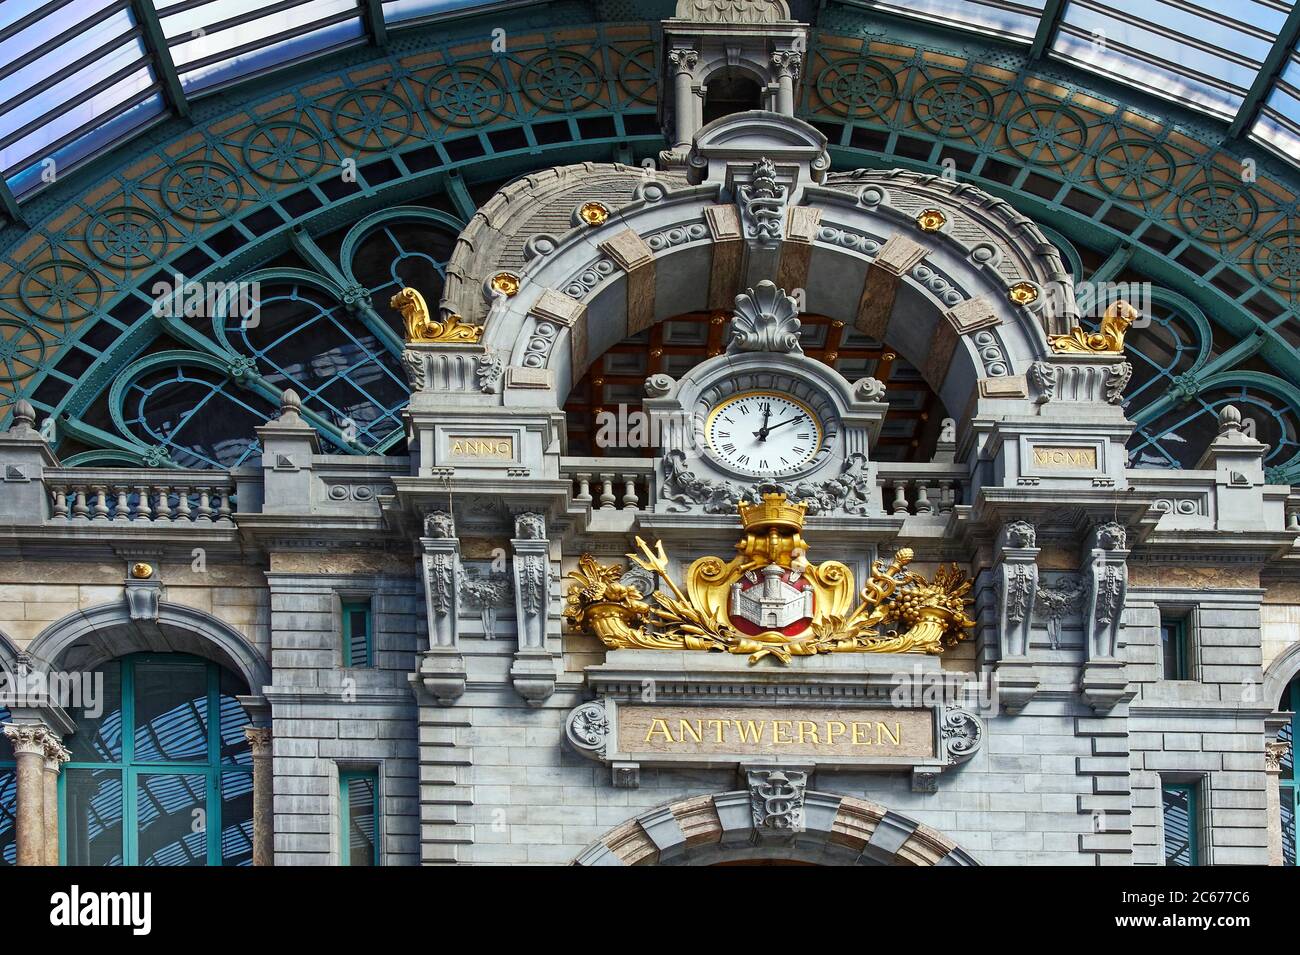 Central Train Station interior,1895-1905, lavish decorations, marble, stone, clock,dome ceiling,  transportation, Antwerpen, Flanders, Europe, Antwerp Stock Photo